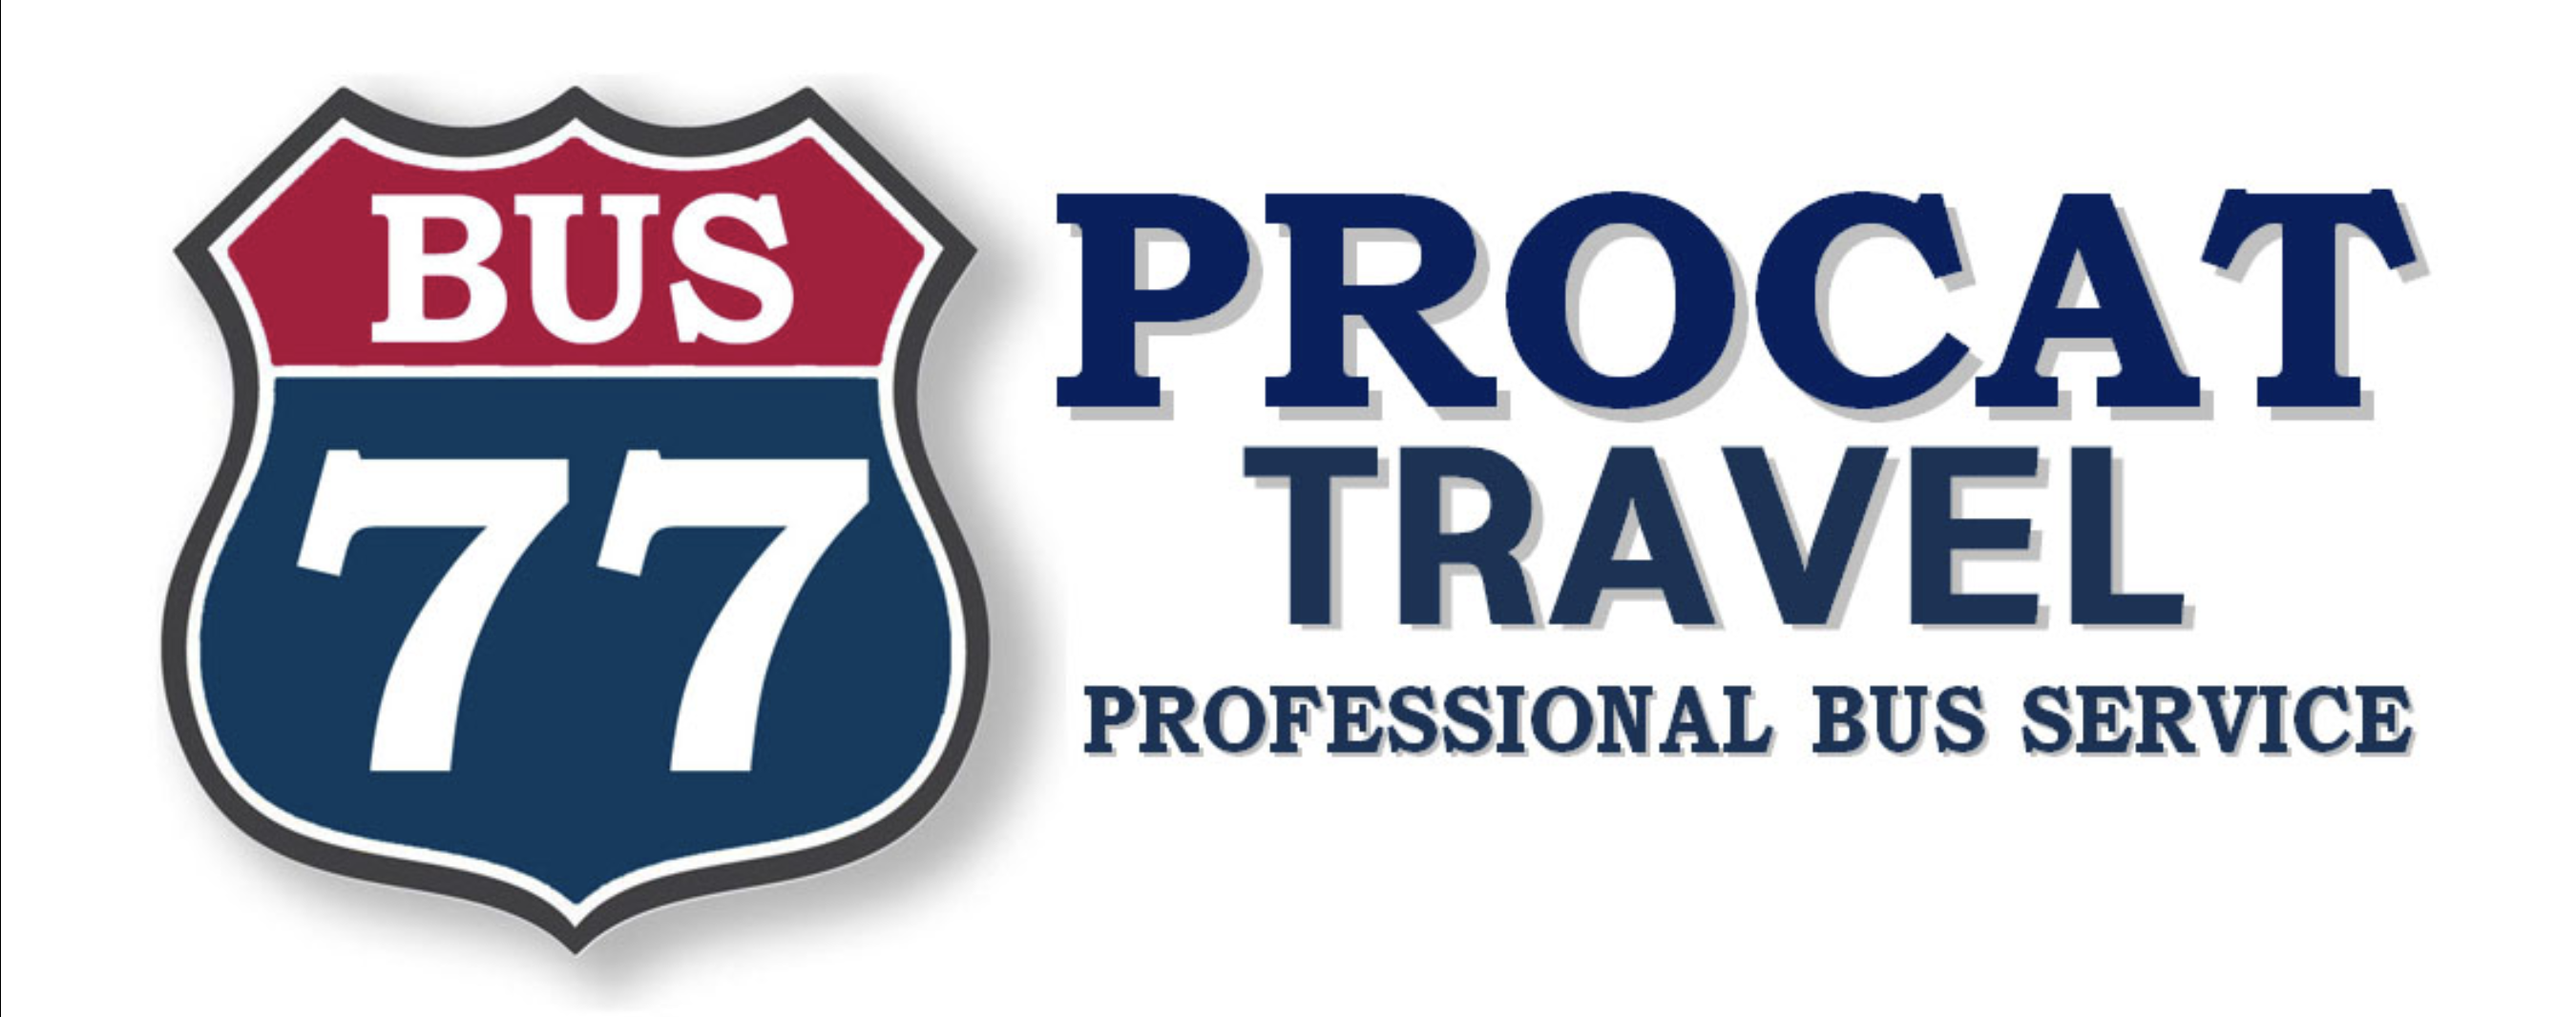 Logo procat travel 77